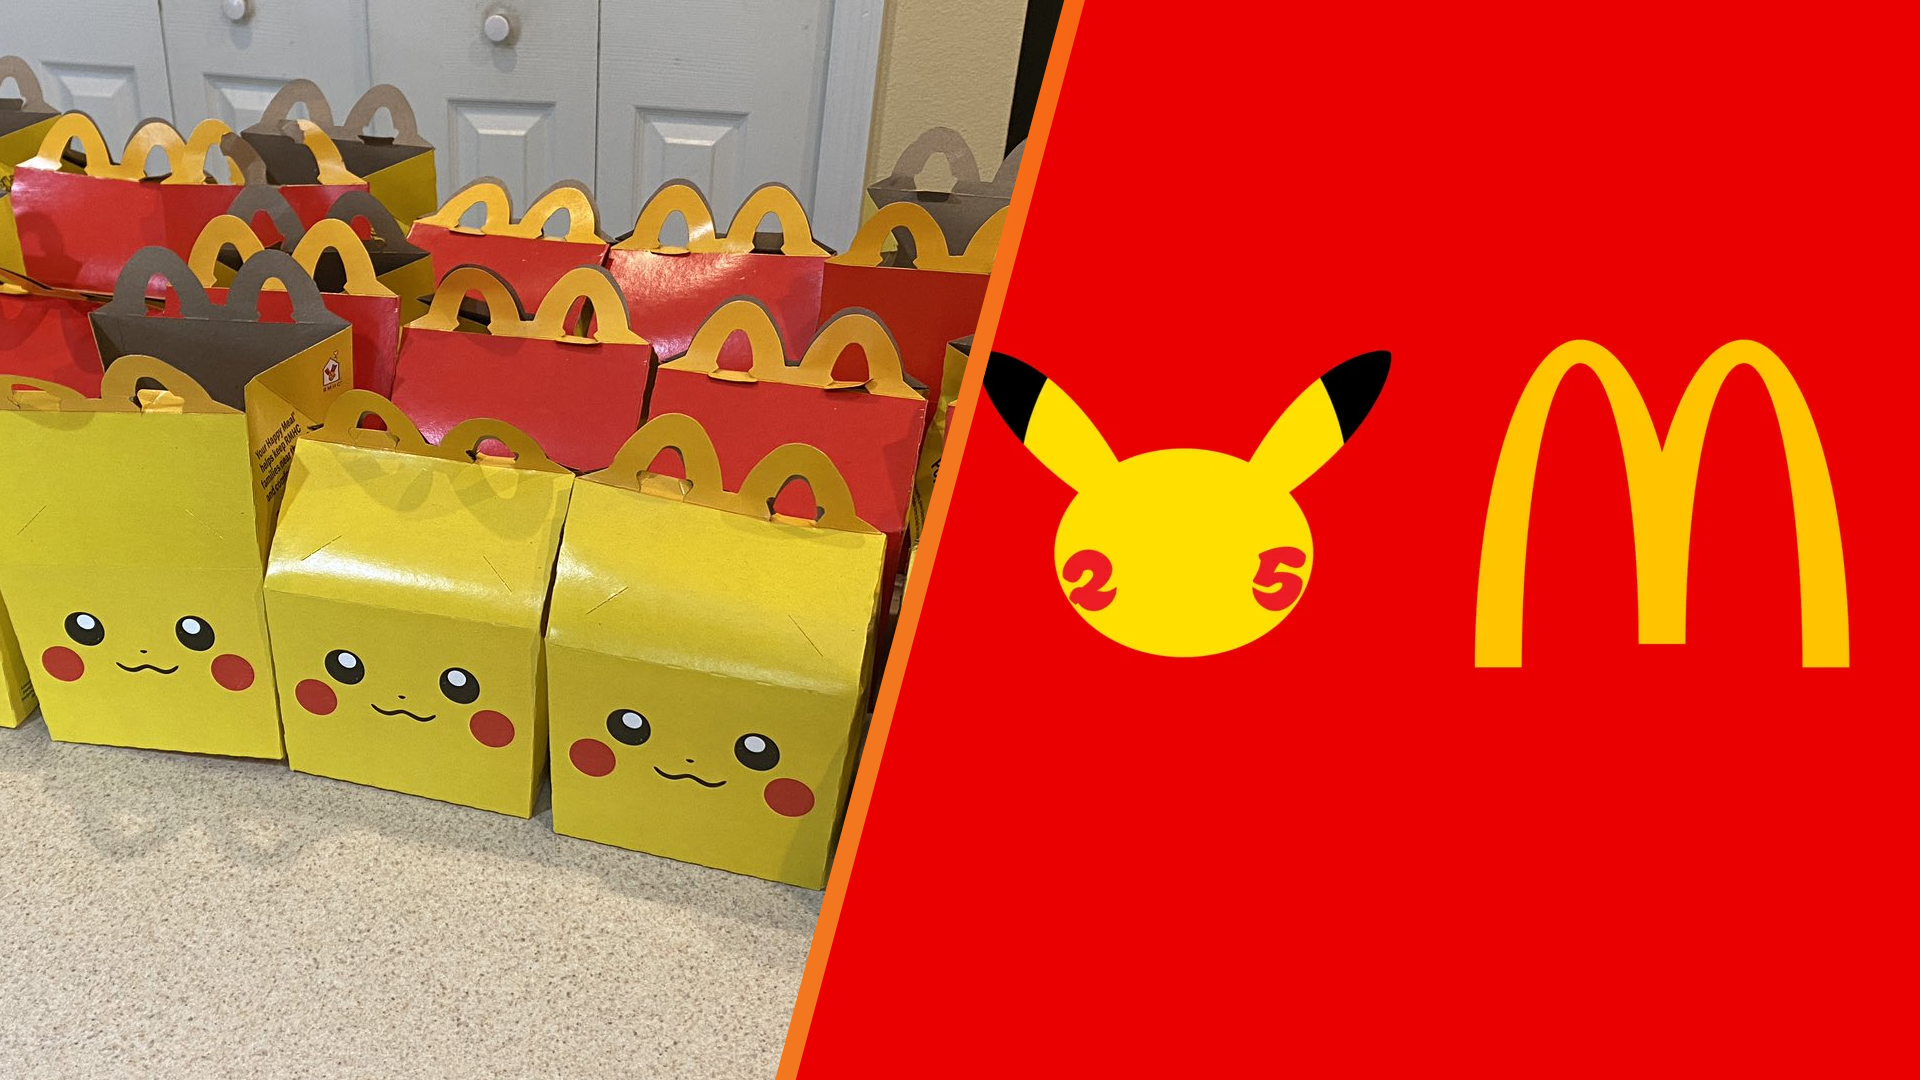 The upcoming McDonald's pokemon happy meal toys : r/PokemonTCG